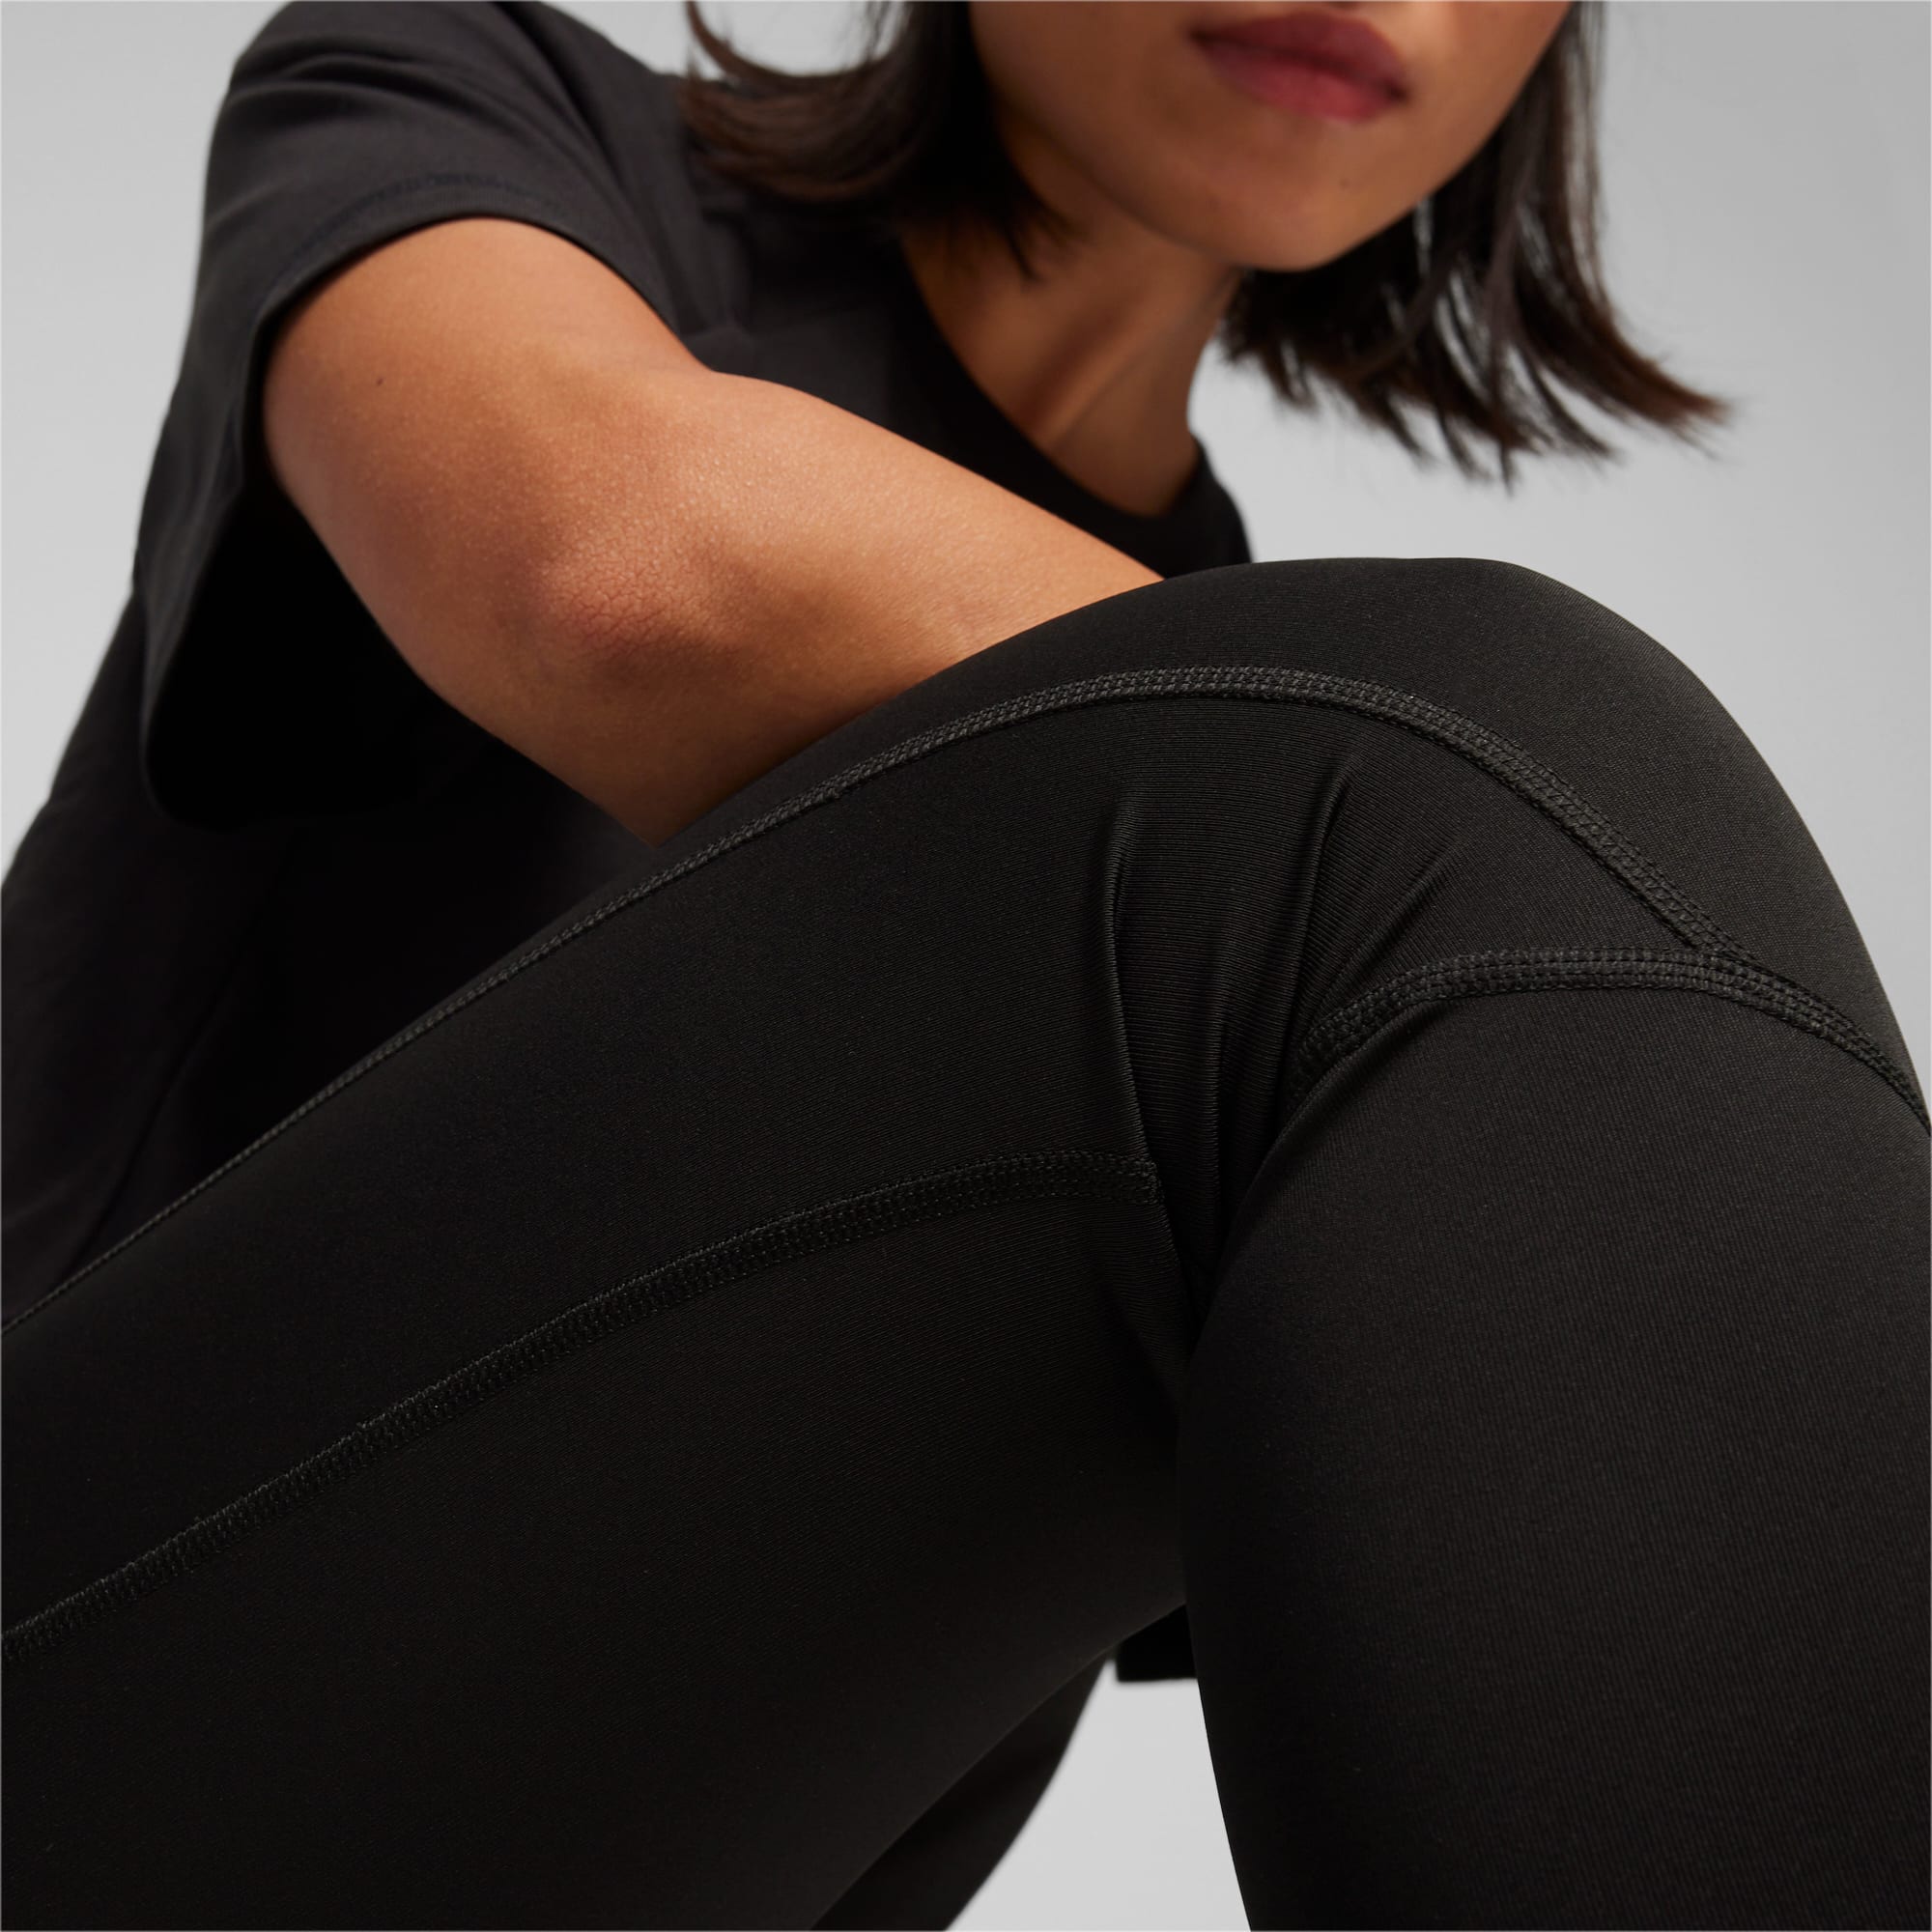 PUMA Legging De Fitness EVOSTRIPE Pour Femme, Noir